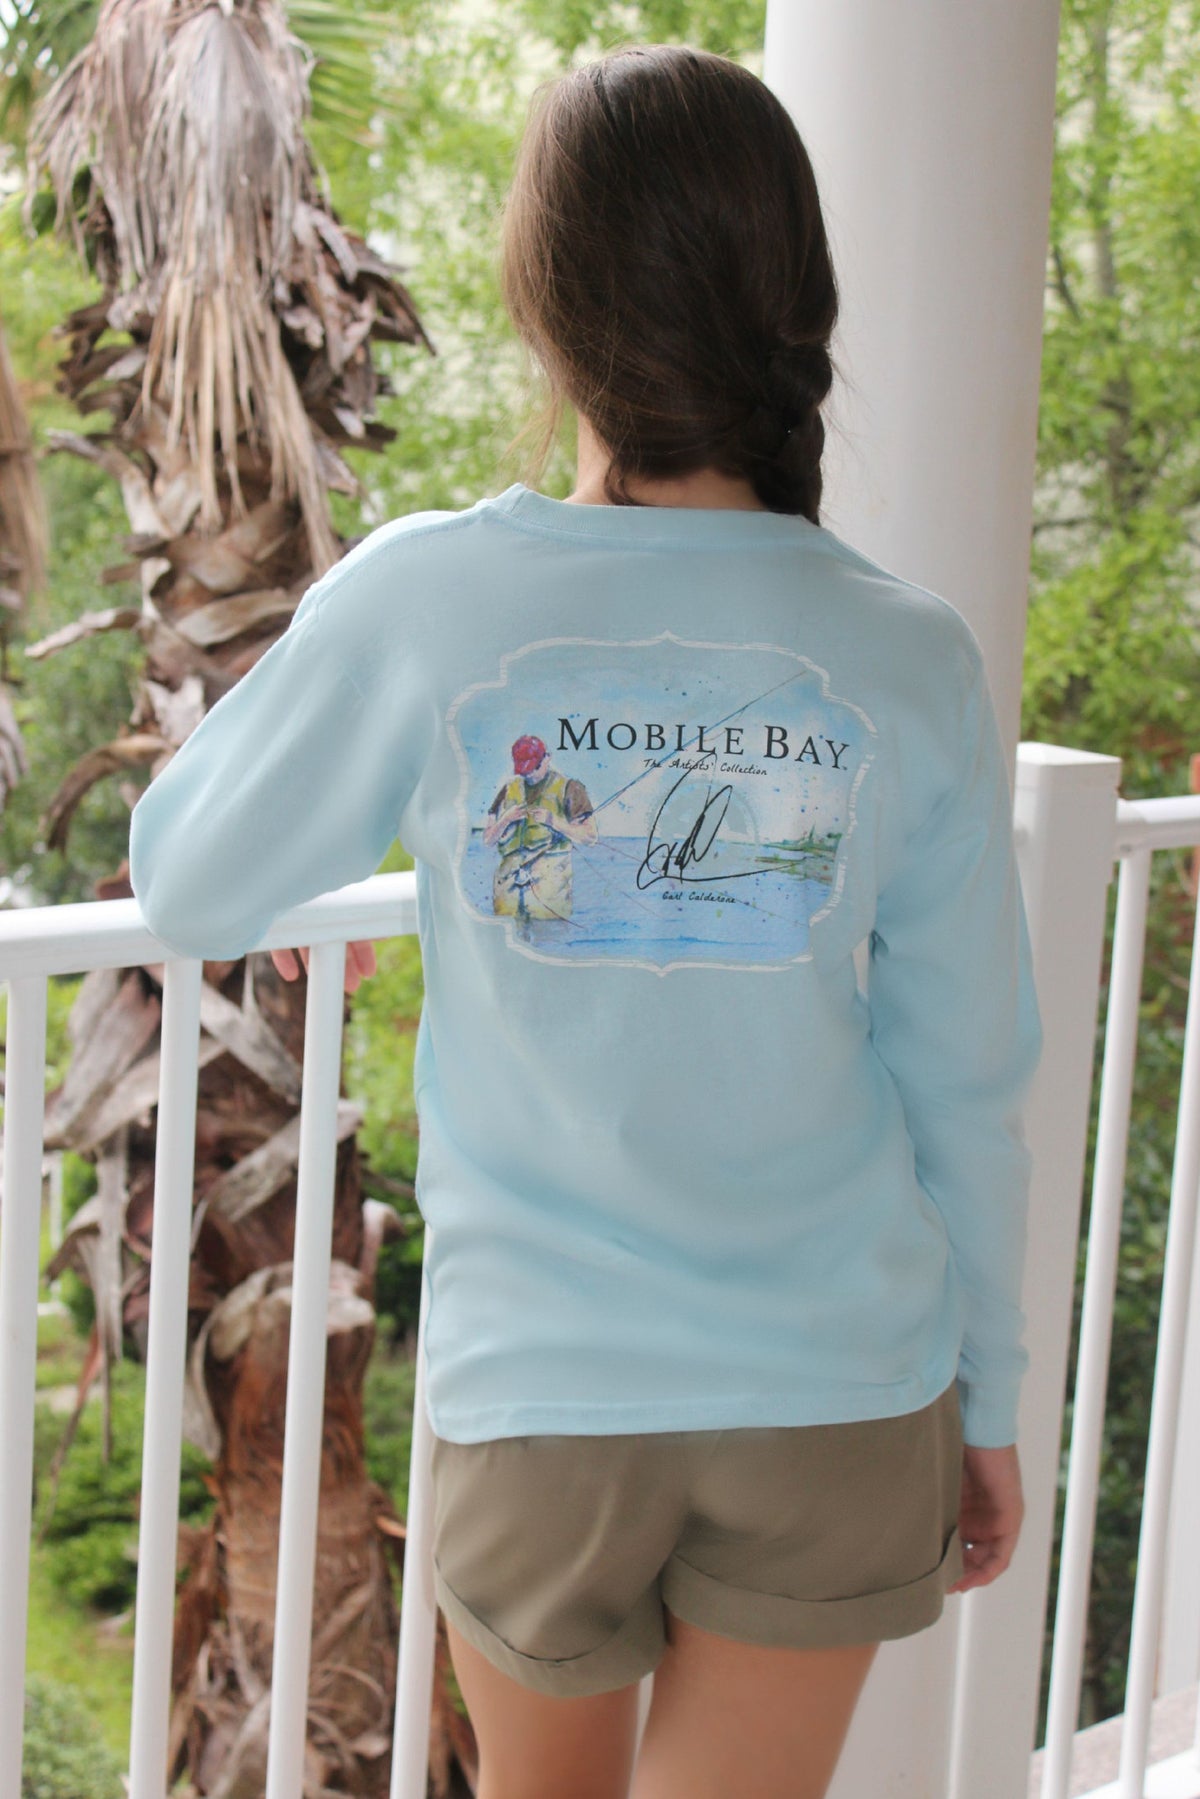 Mobile Bay: Bayside Fishing Long Sleeve Tee, Blue